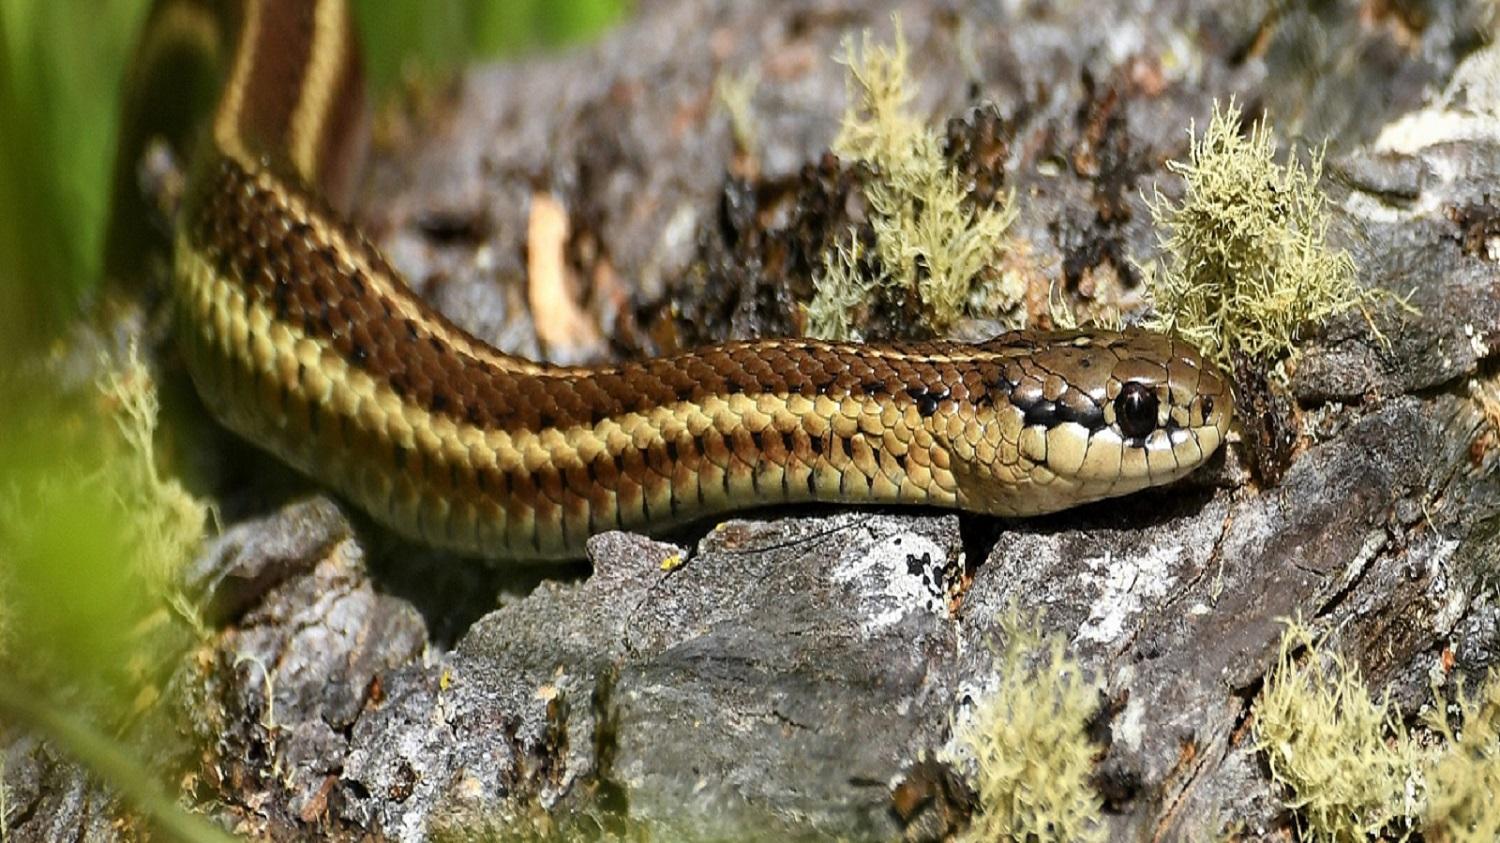 garter snake on a rock